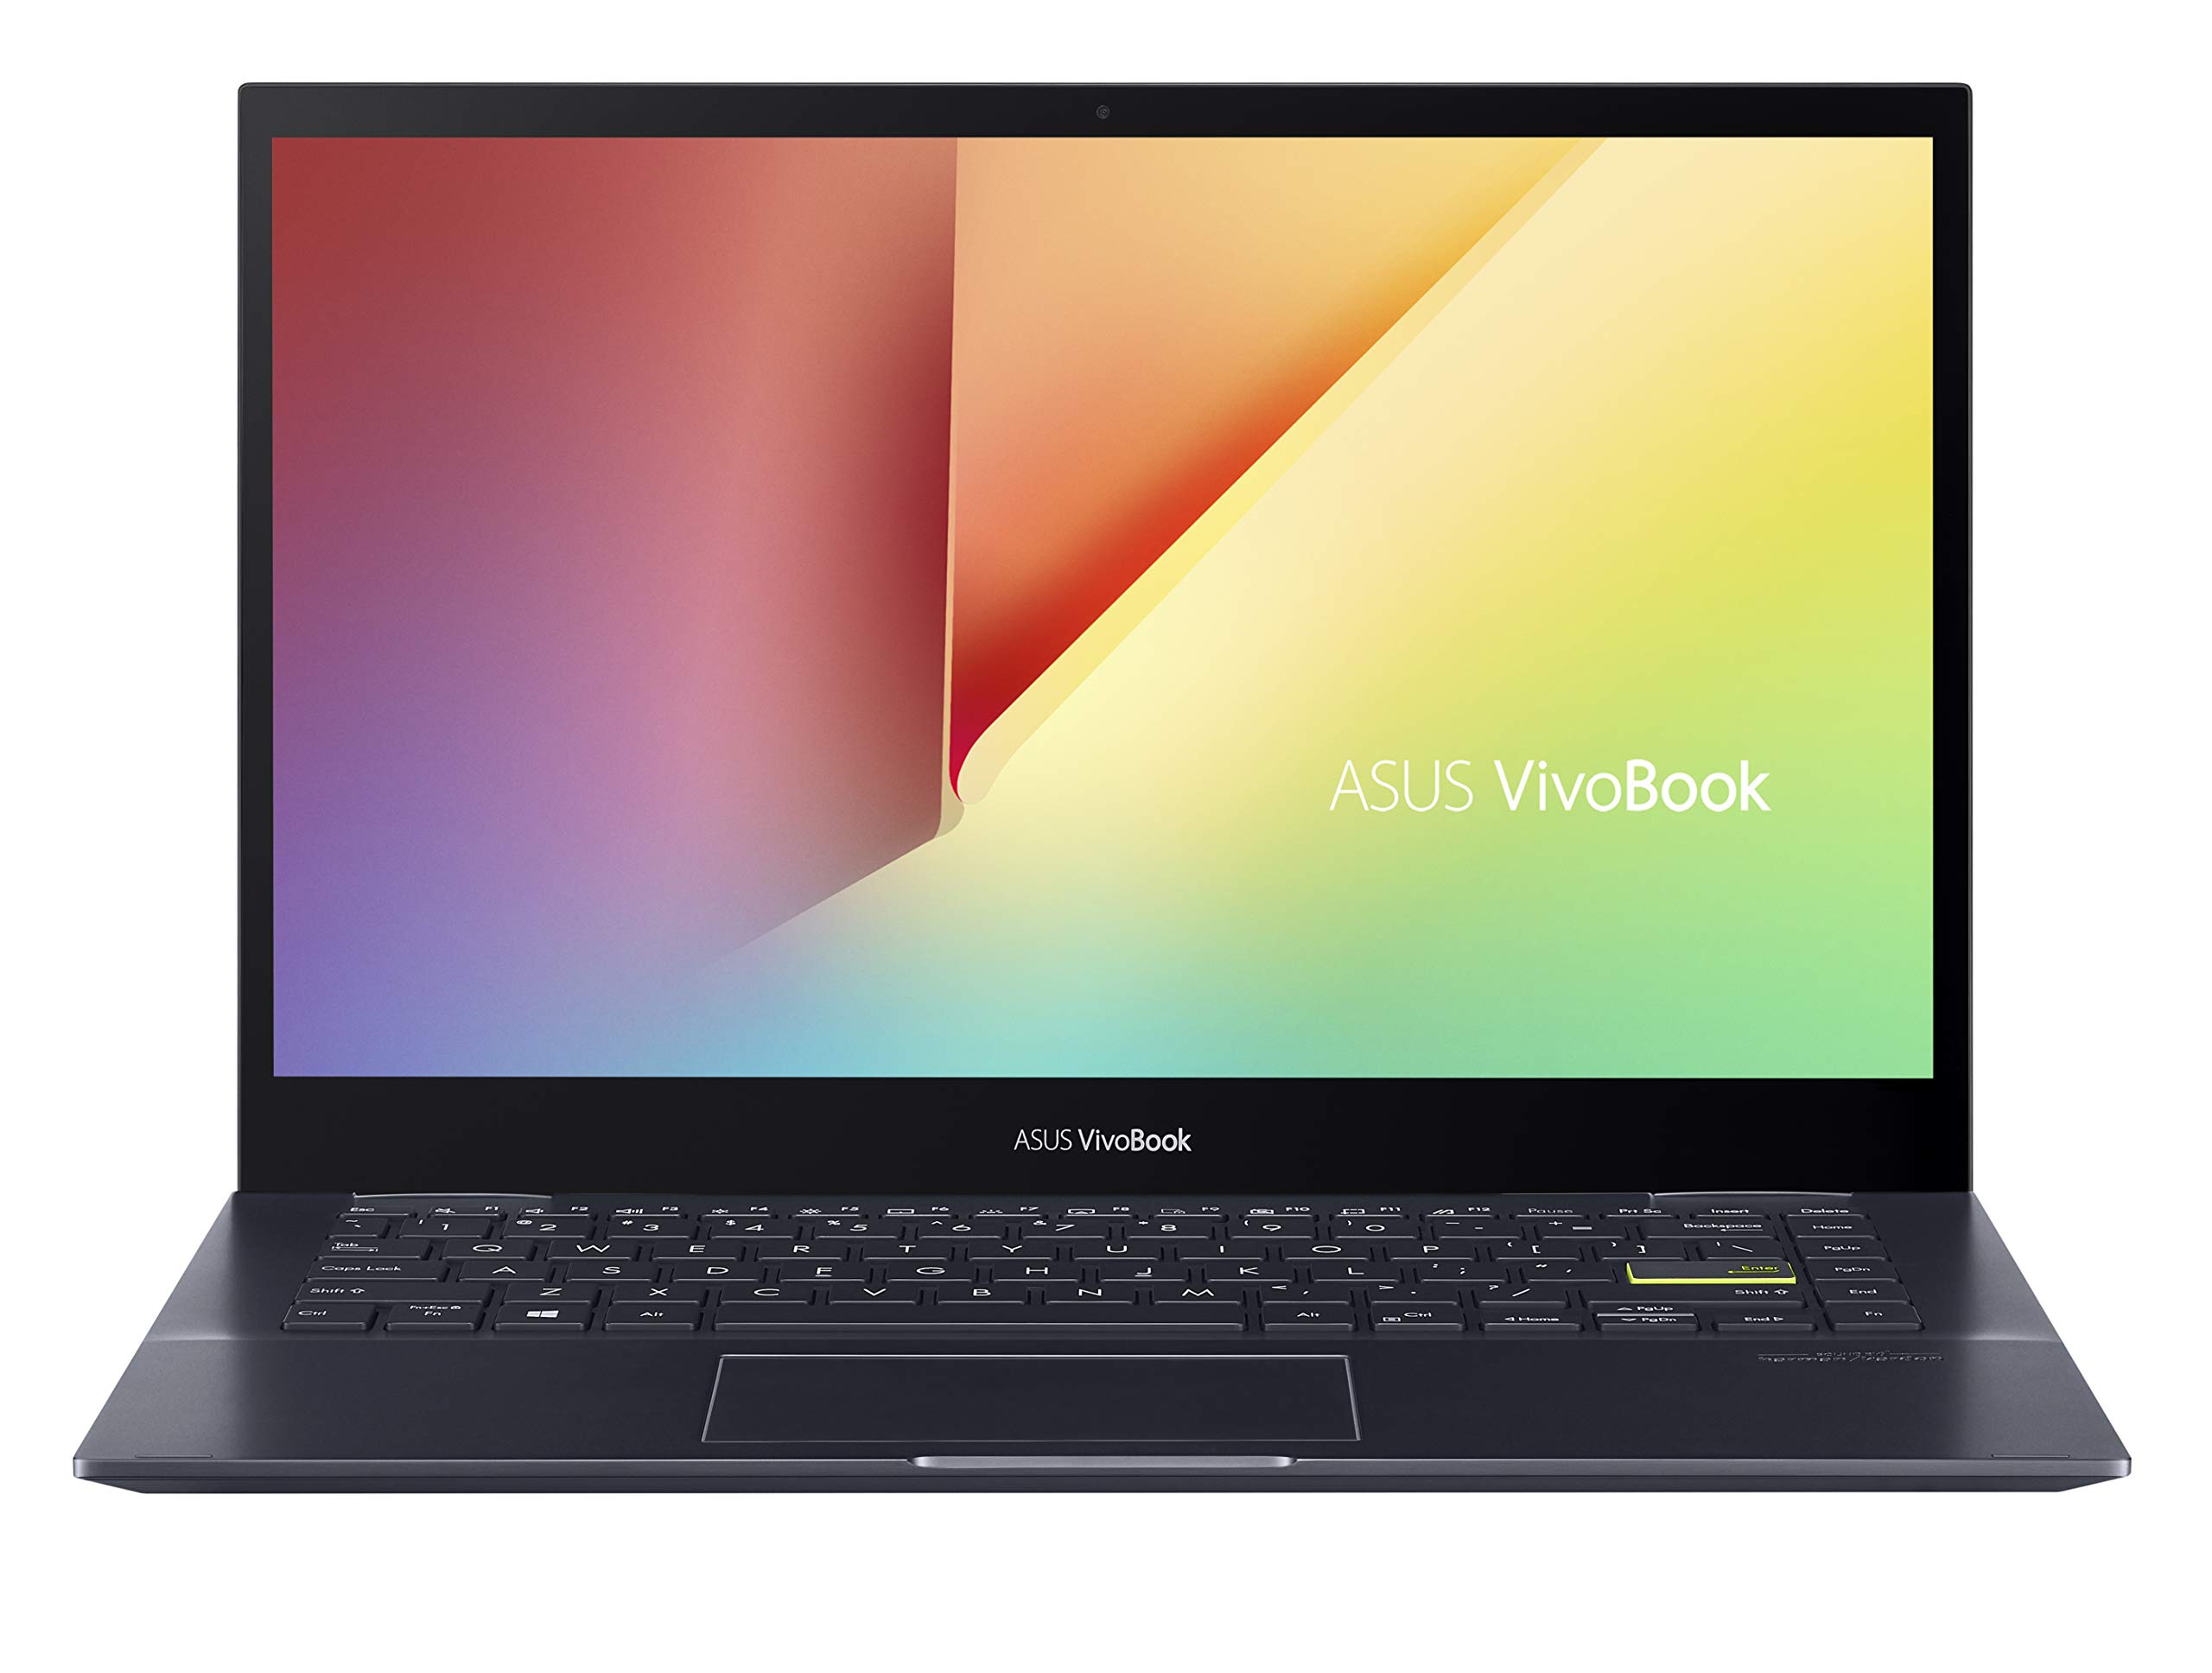 ASUS VivoBook Flip 14 Thin and Light 2-in-1 Laptop, 14” FHD Touch Display, AMD Ryzen 5 4500U, 8GB DDR4 RAM, 256GB SSD, Glossy, Stylus, Fingerprint Reader, Windows 10 Home, Bespoke Black, TM420IA-DB51T